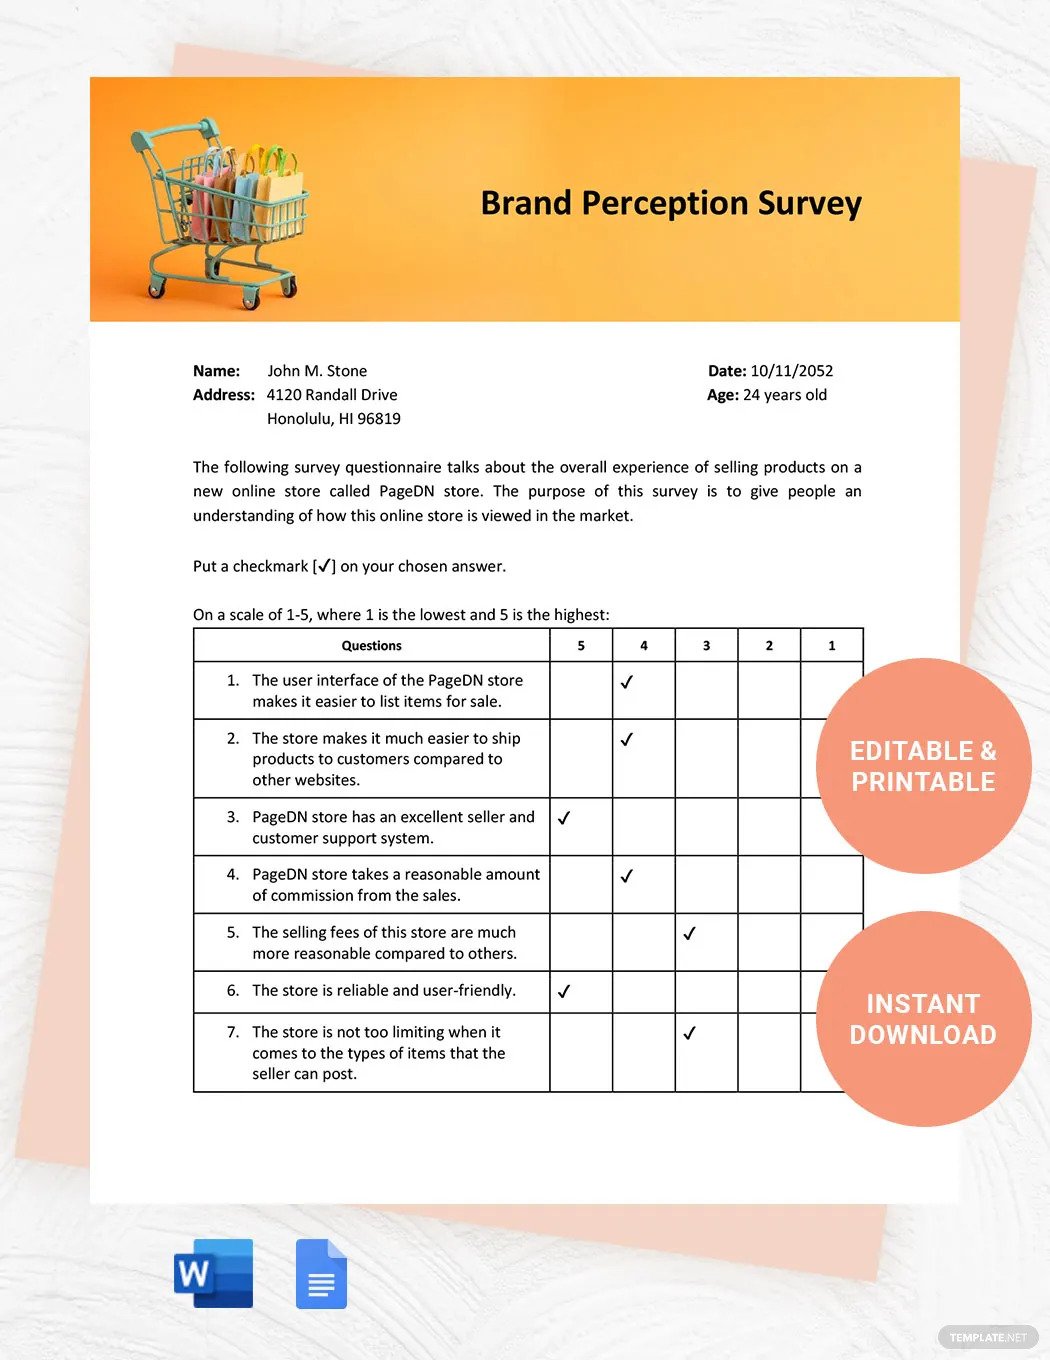 brand perception survey